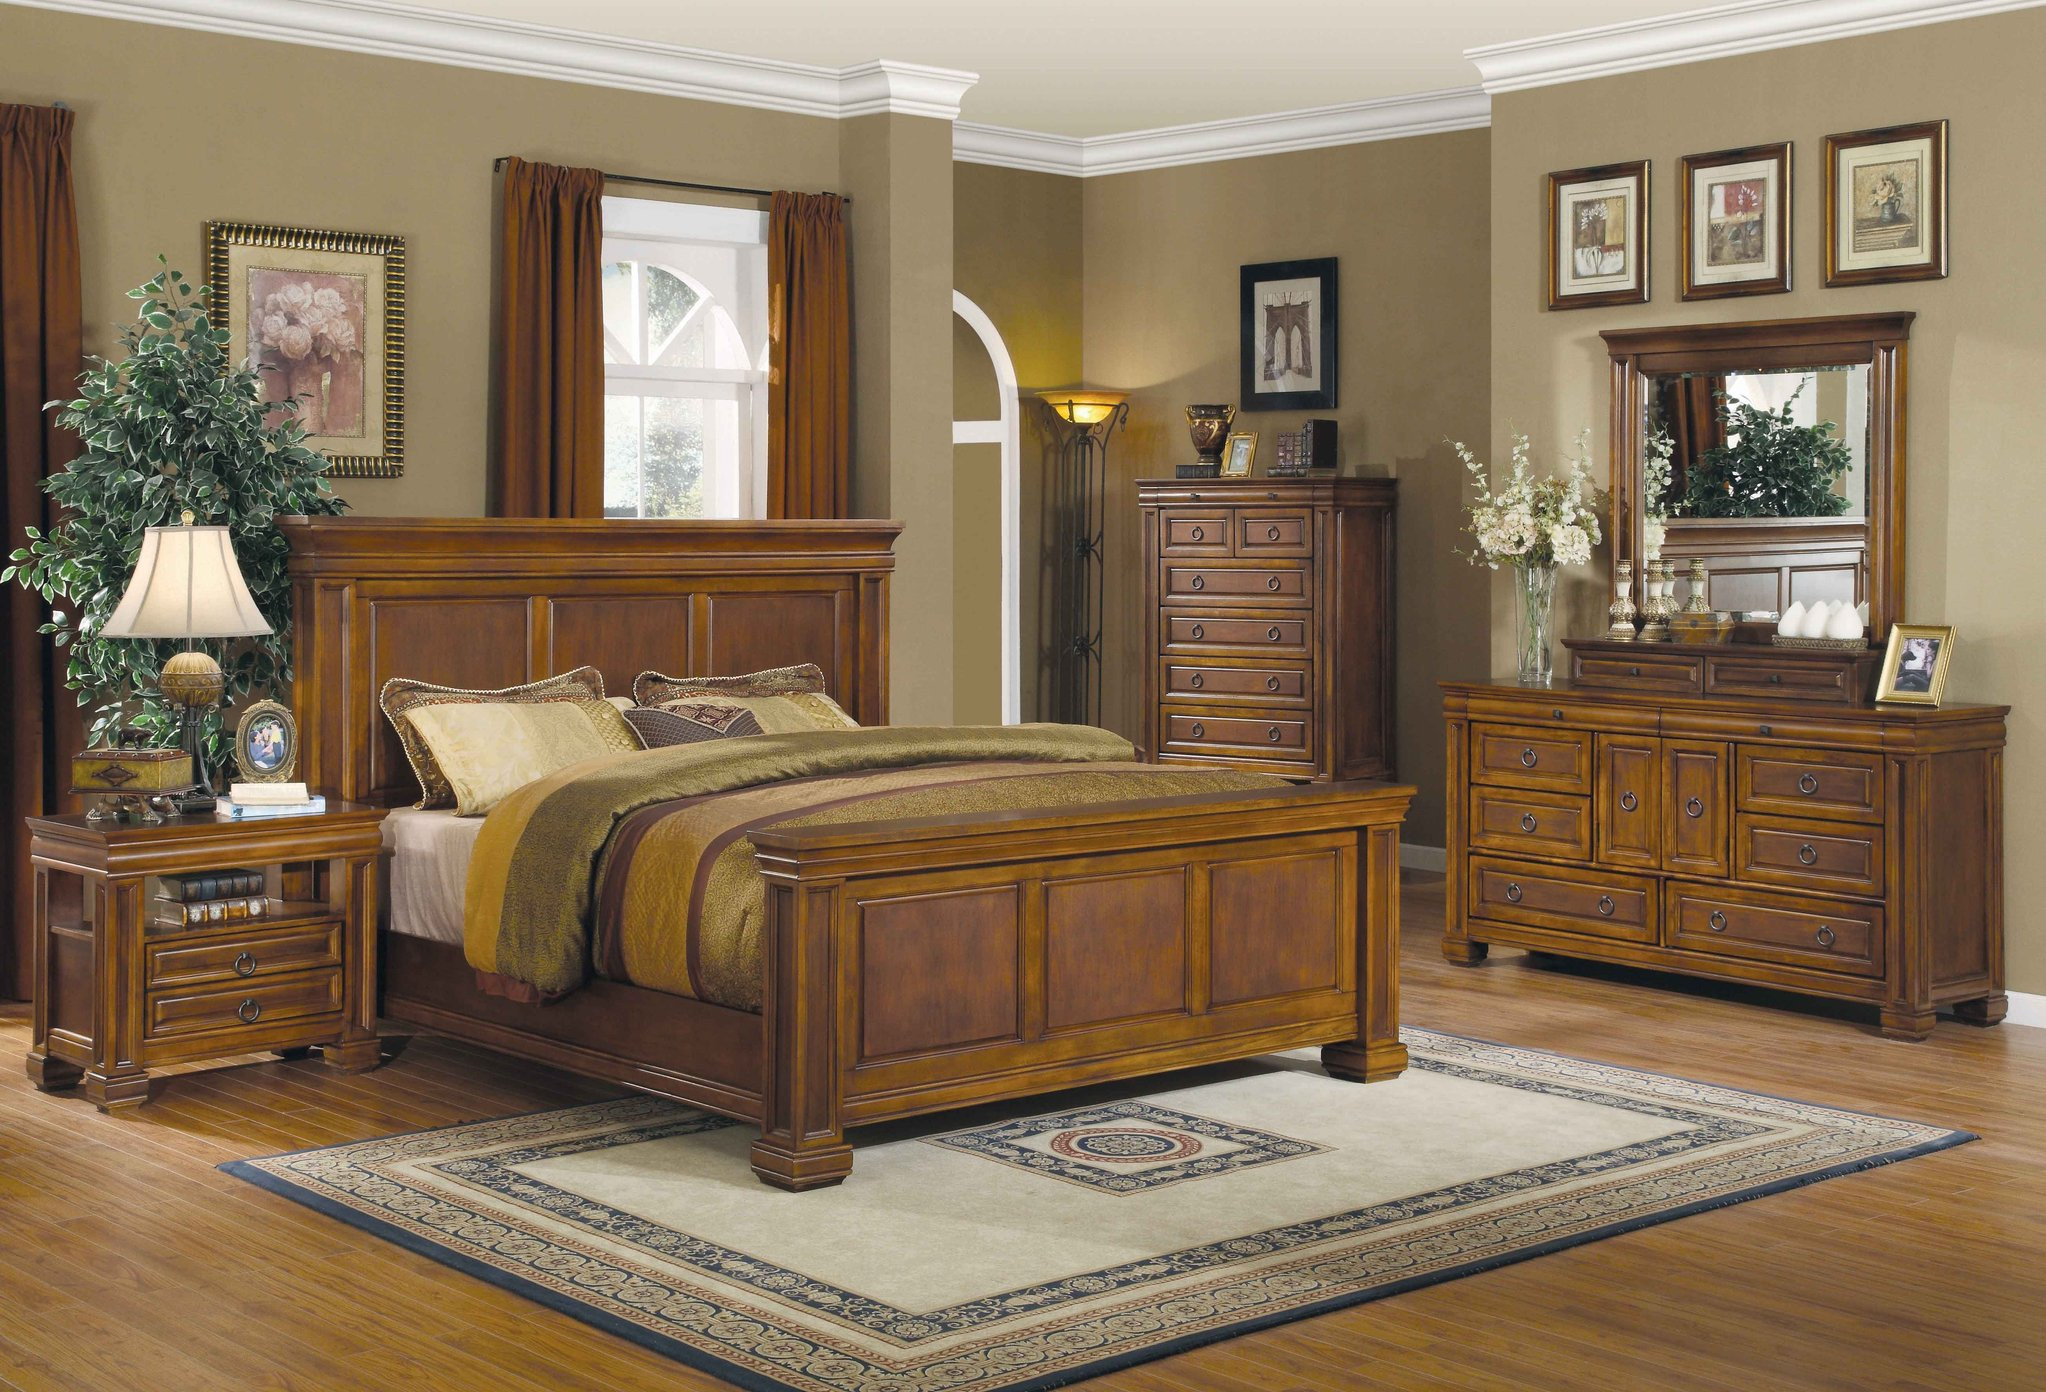 Rustic Wood Bedroom Sets
 Antique Rustic Bedroom Furniture Wood King and Queen